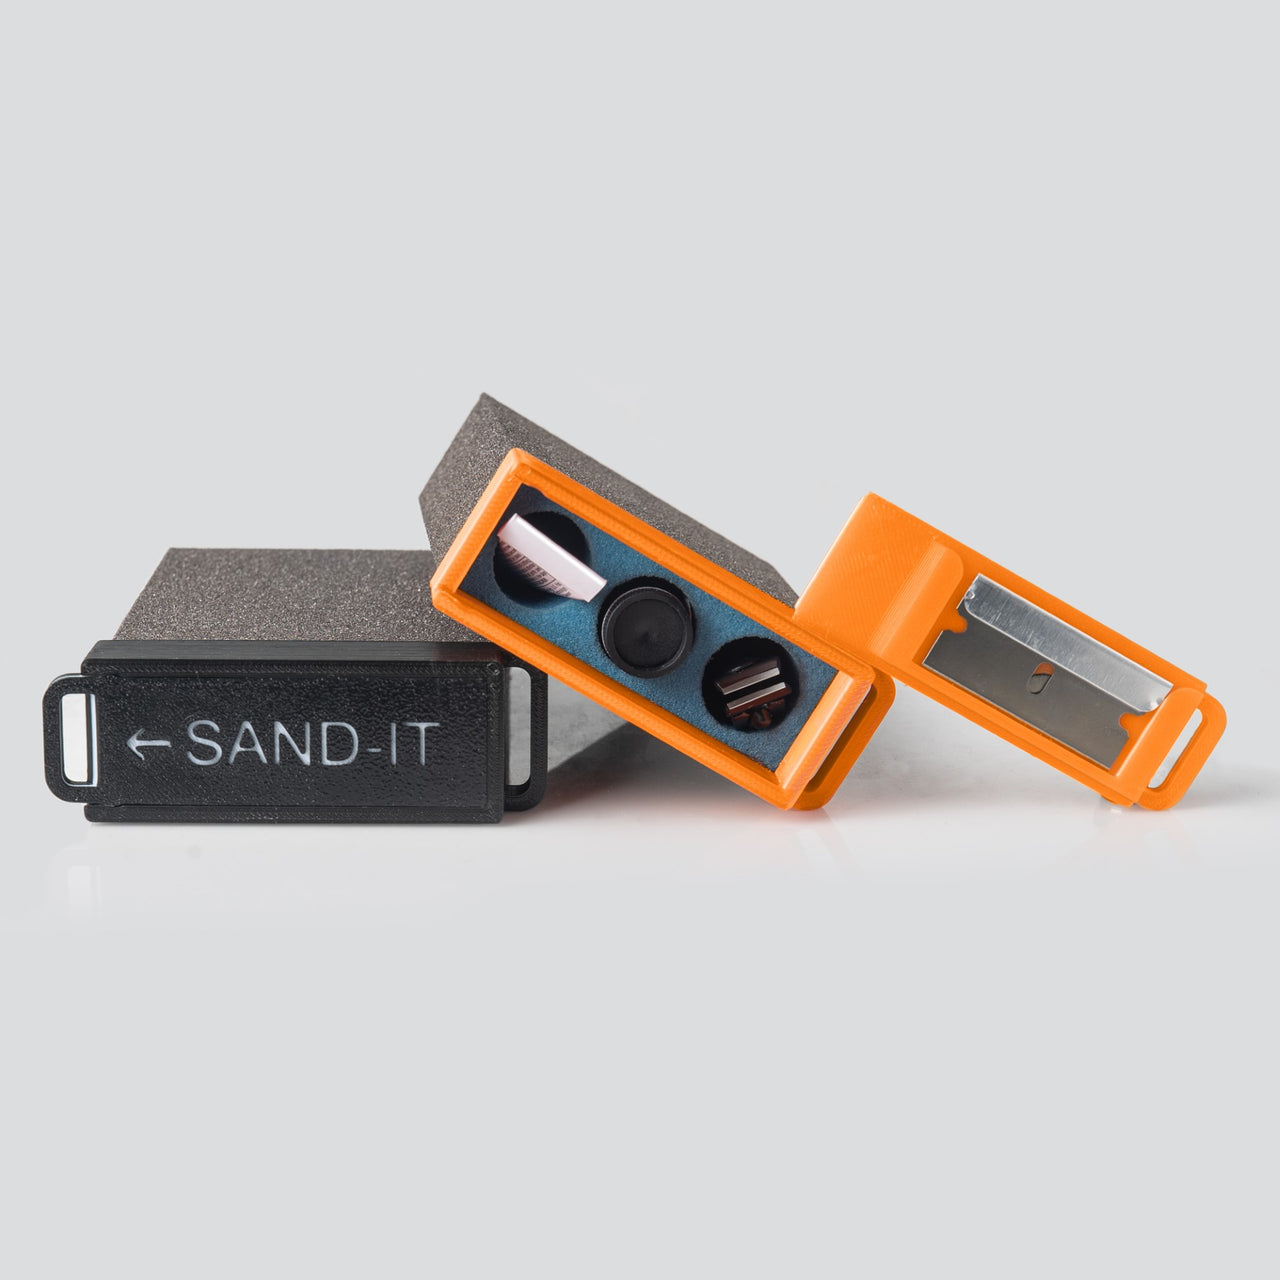 Sand-It Skin Care Kit